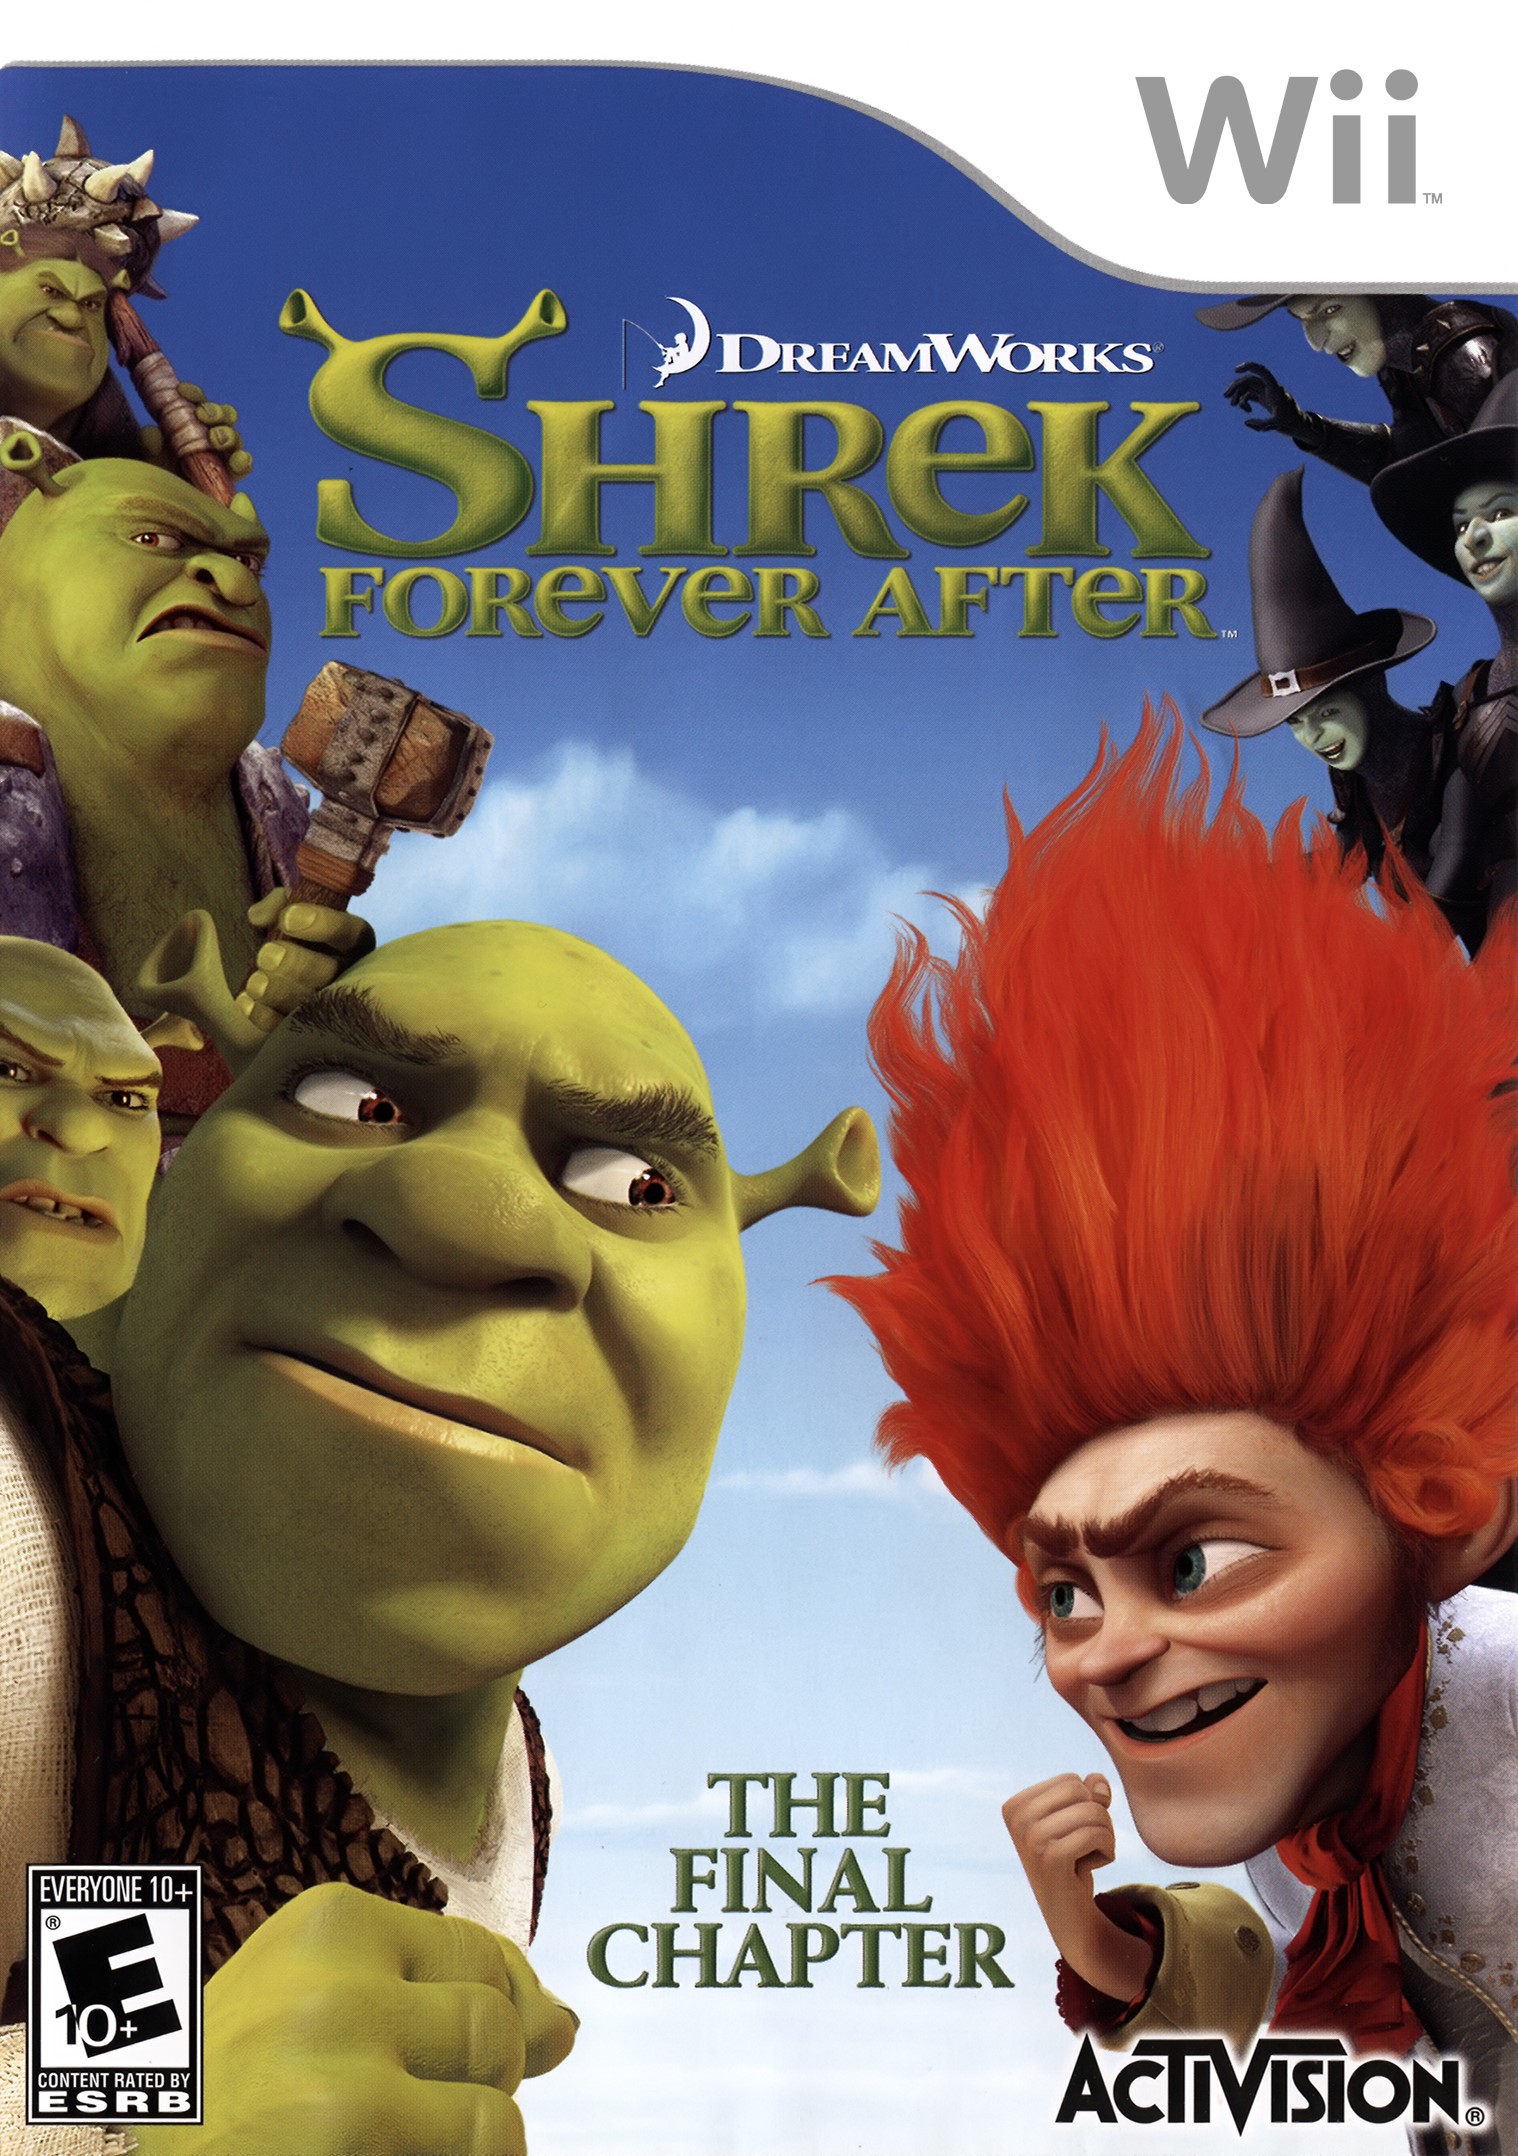 'Shrek Forever After: The Final Chapter'